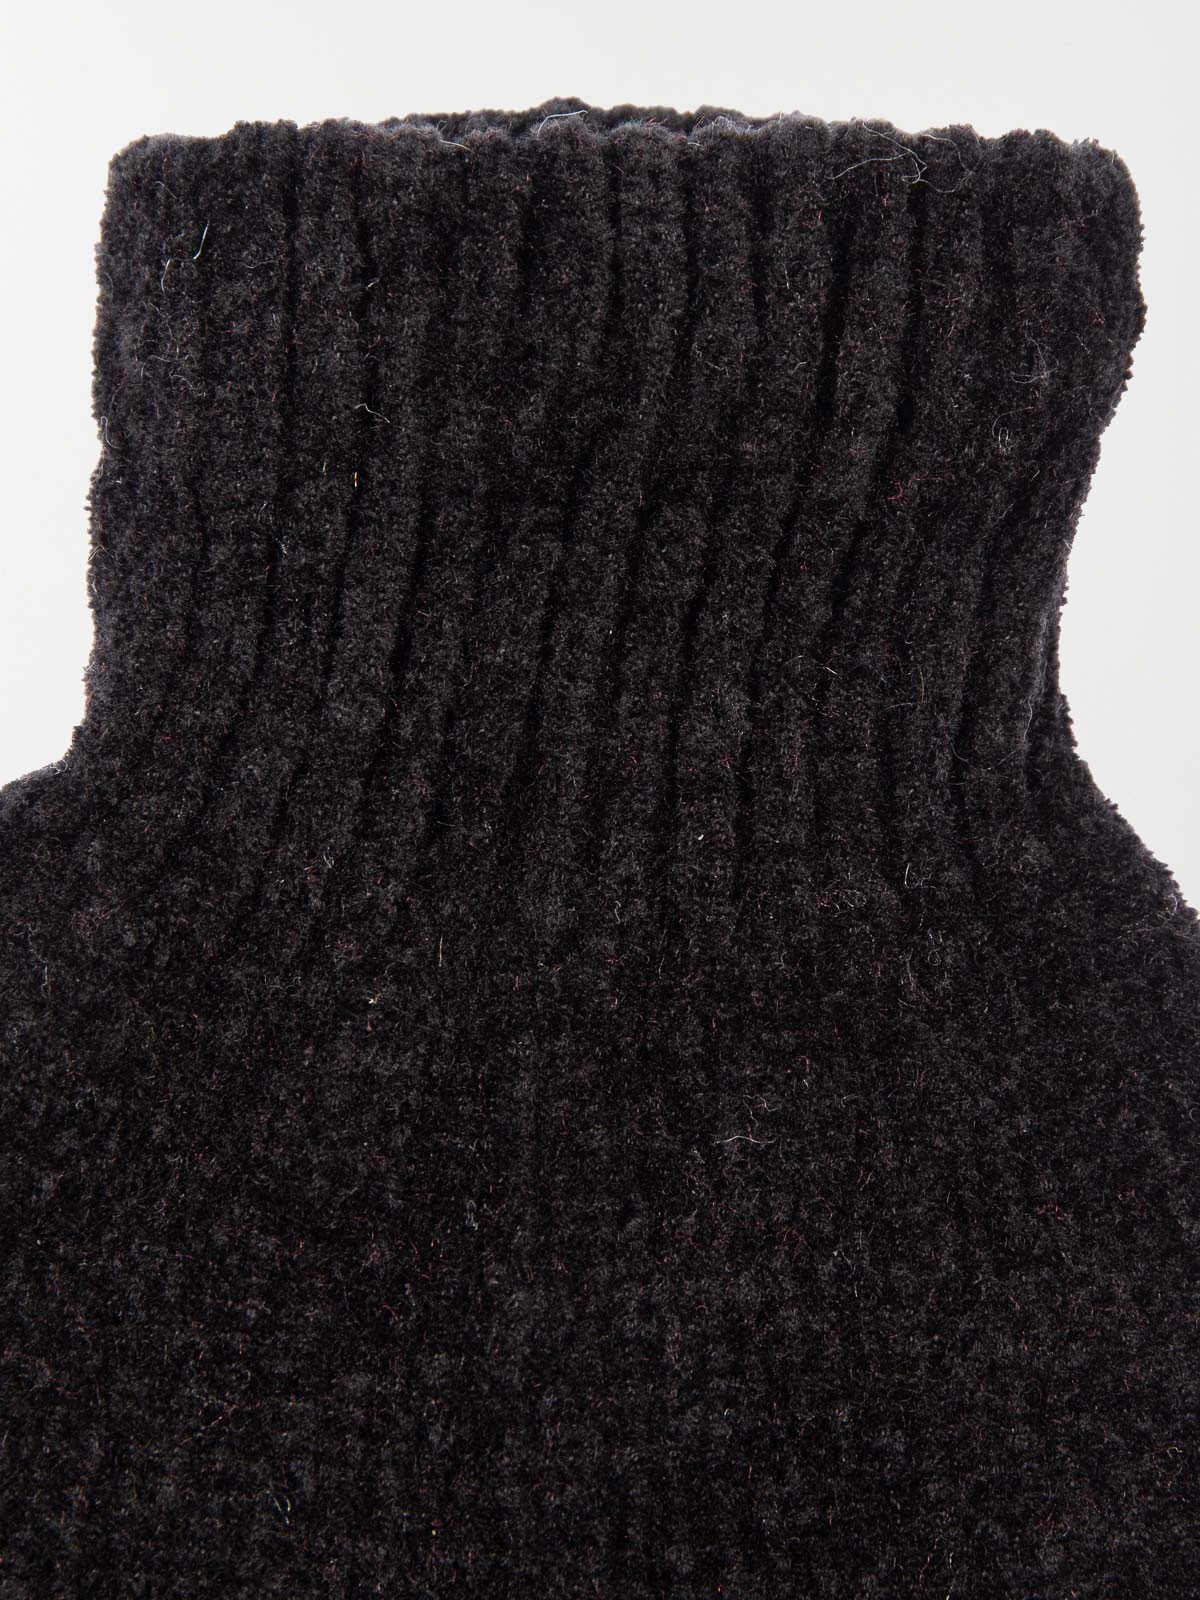 Gants maille Femme Noir recyclée - Noir - Kiabi - 16.99€